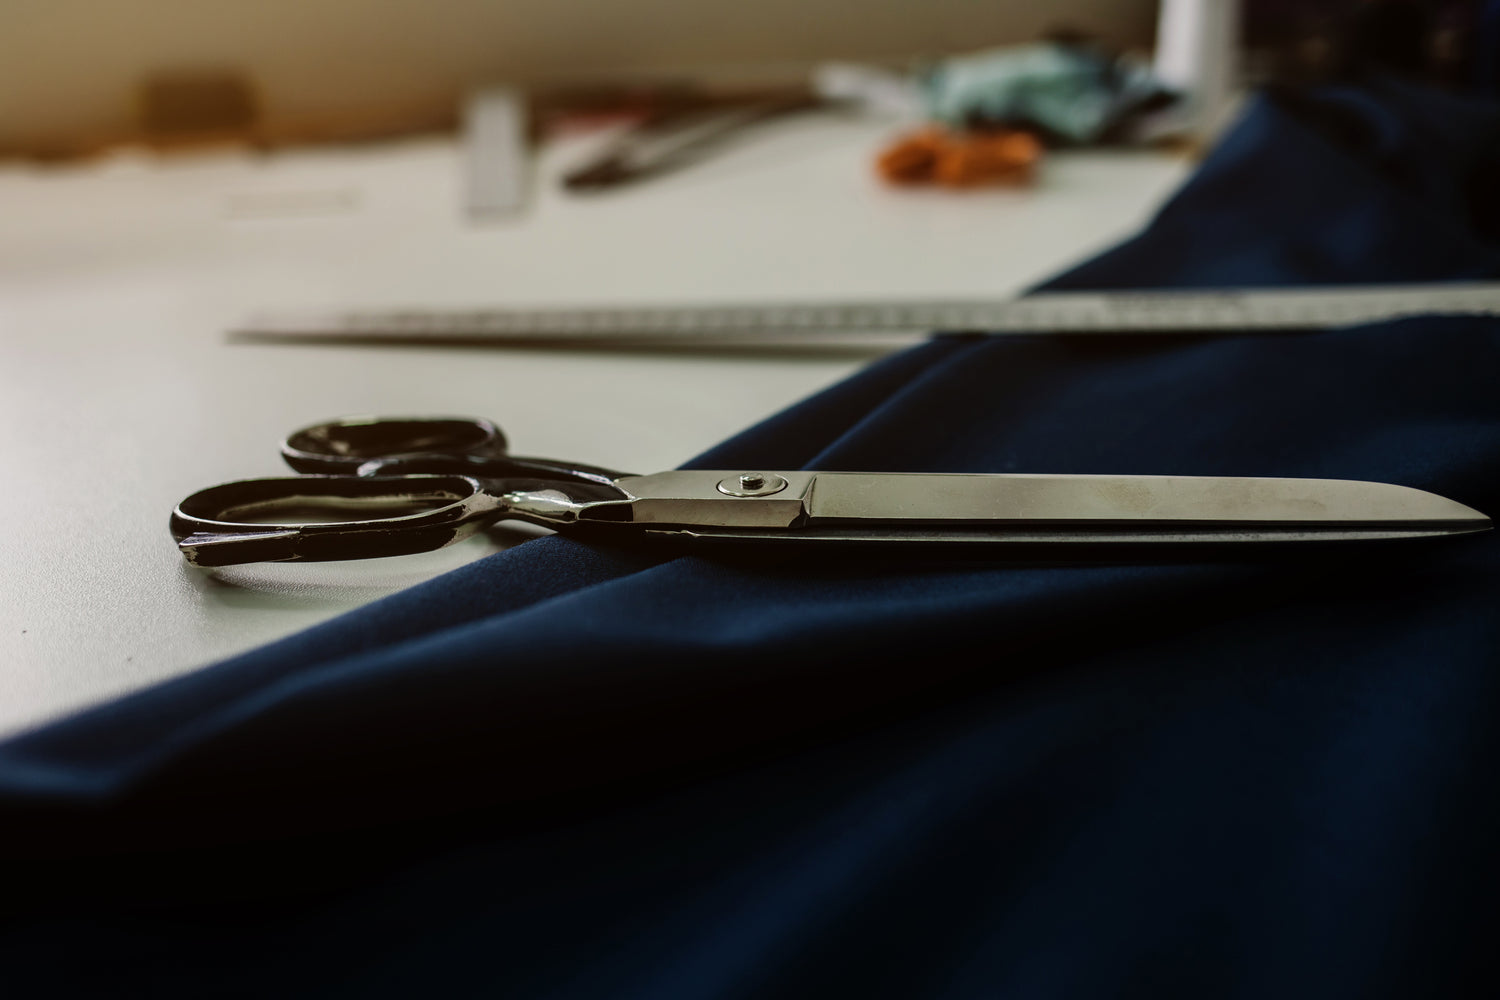 Scissors laying on fabric